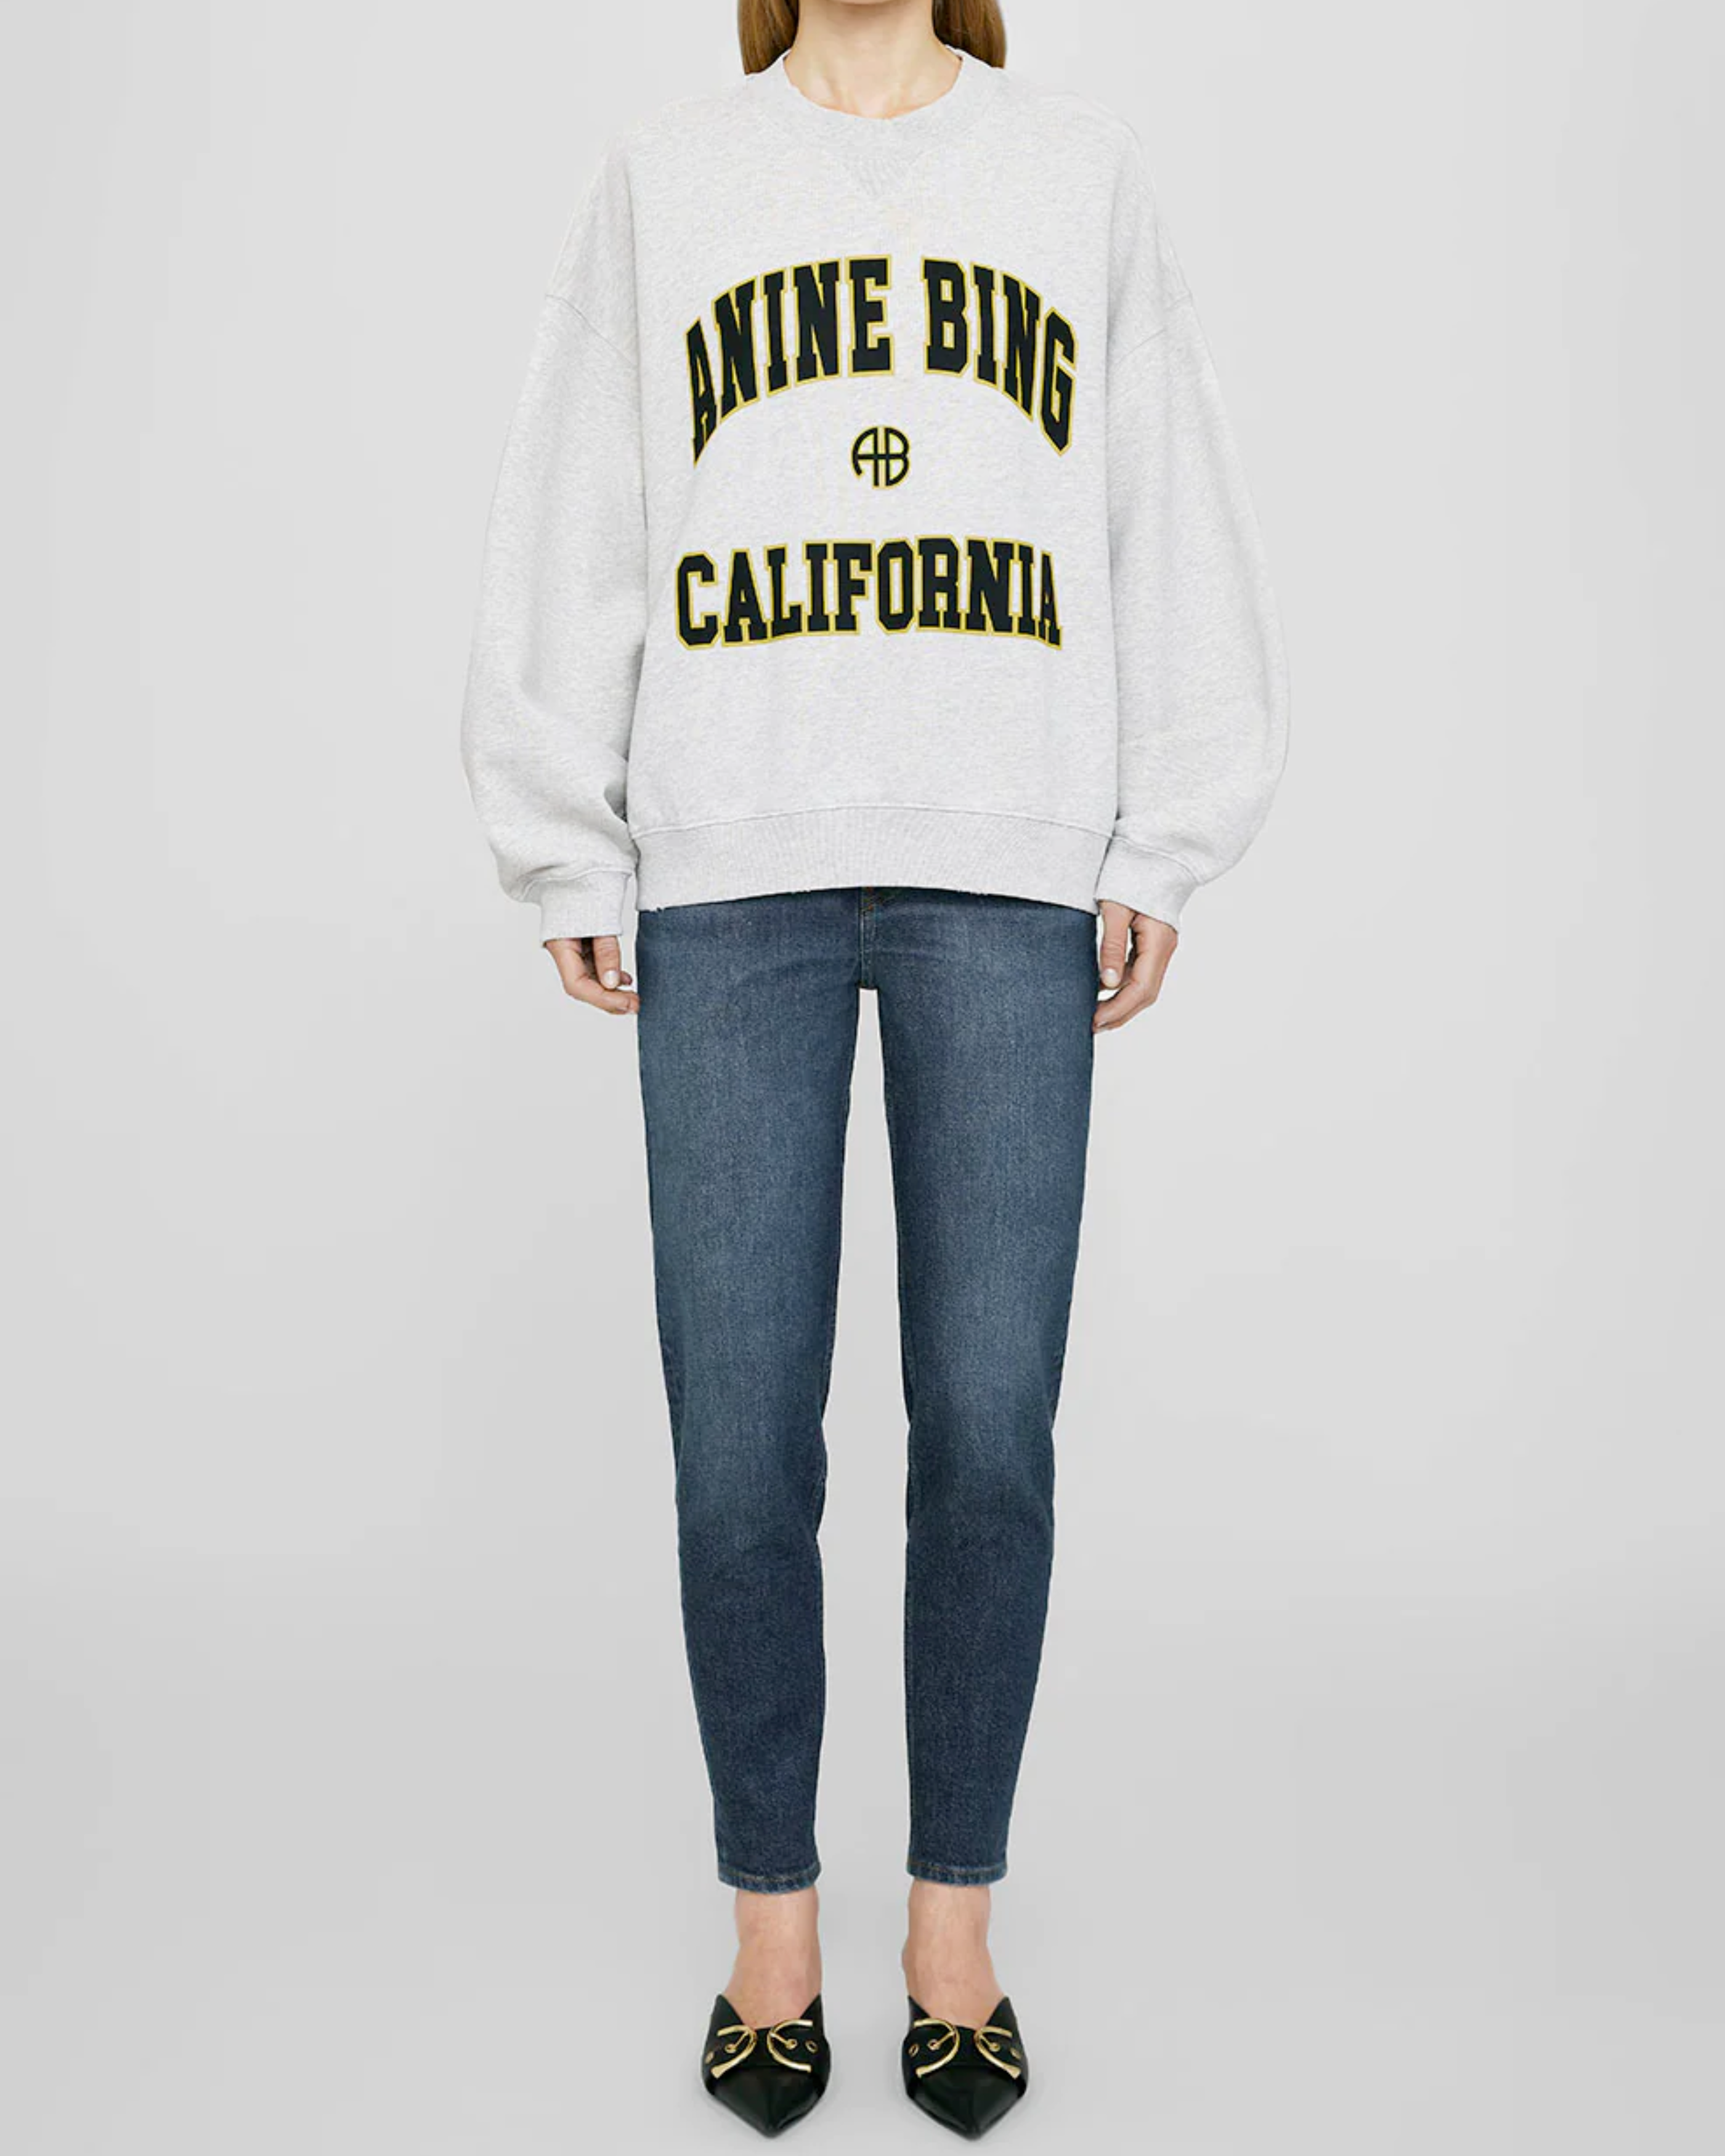 Anine Bing Jaci California Sweatshirt in Heather Grey